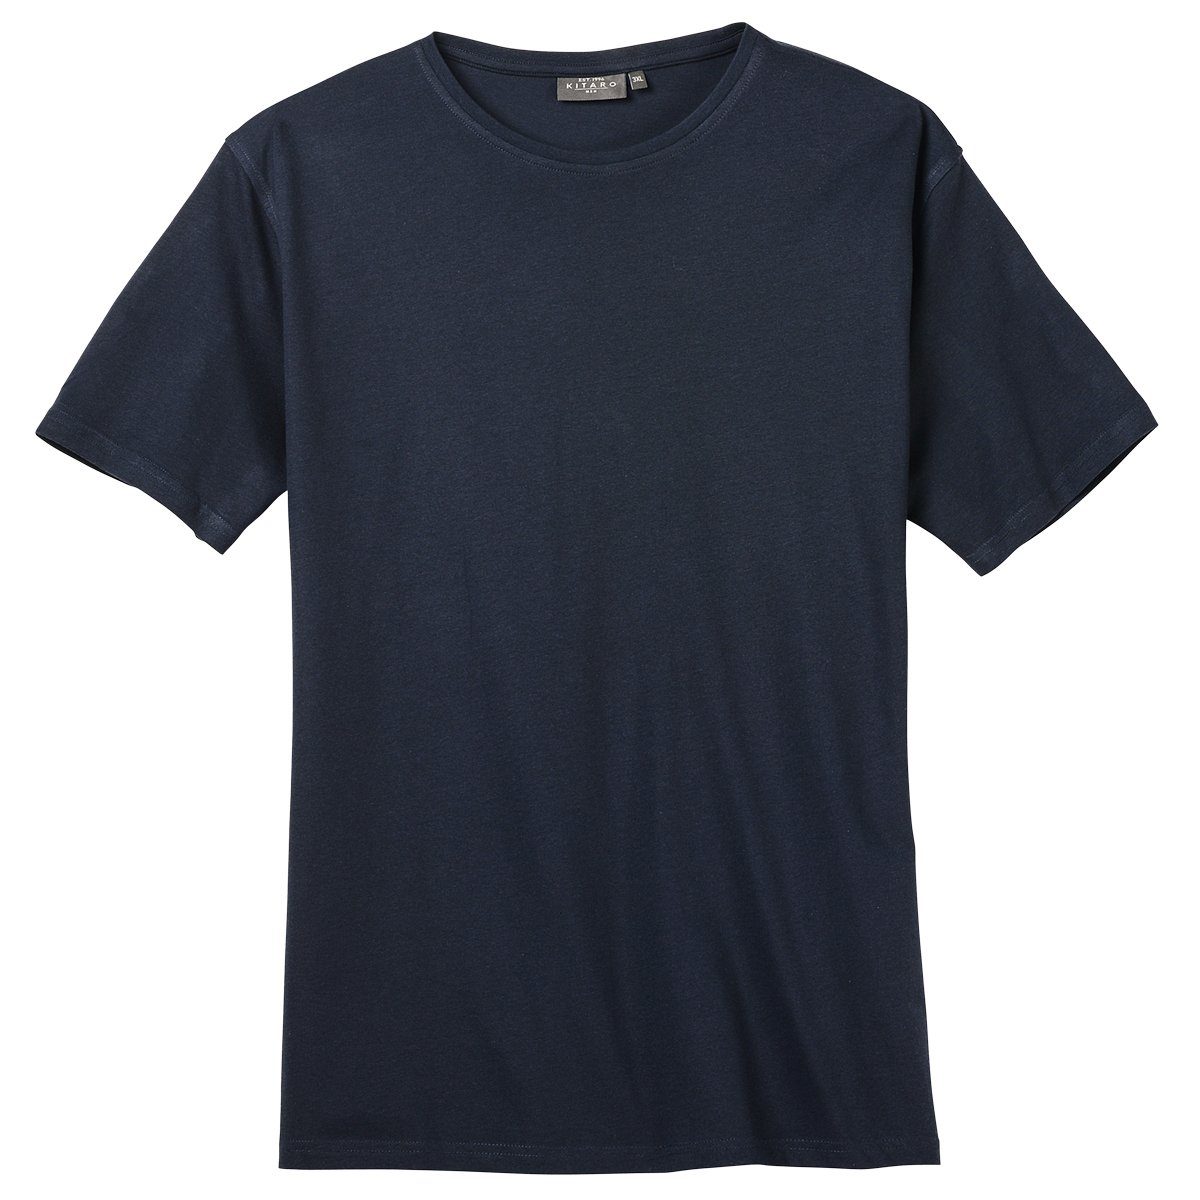 Kitaro T-Shirts online kaufen | OTTO